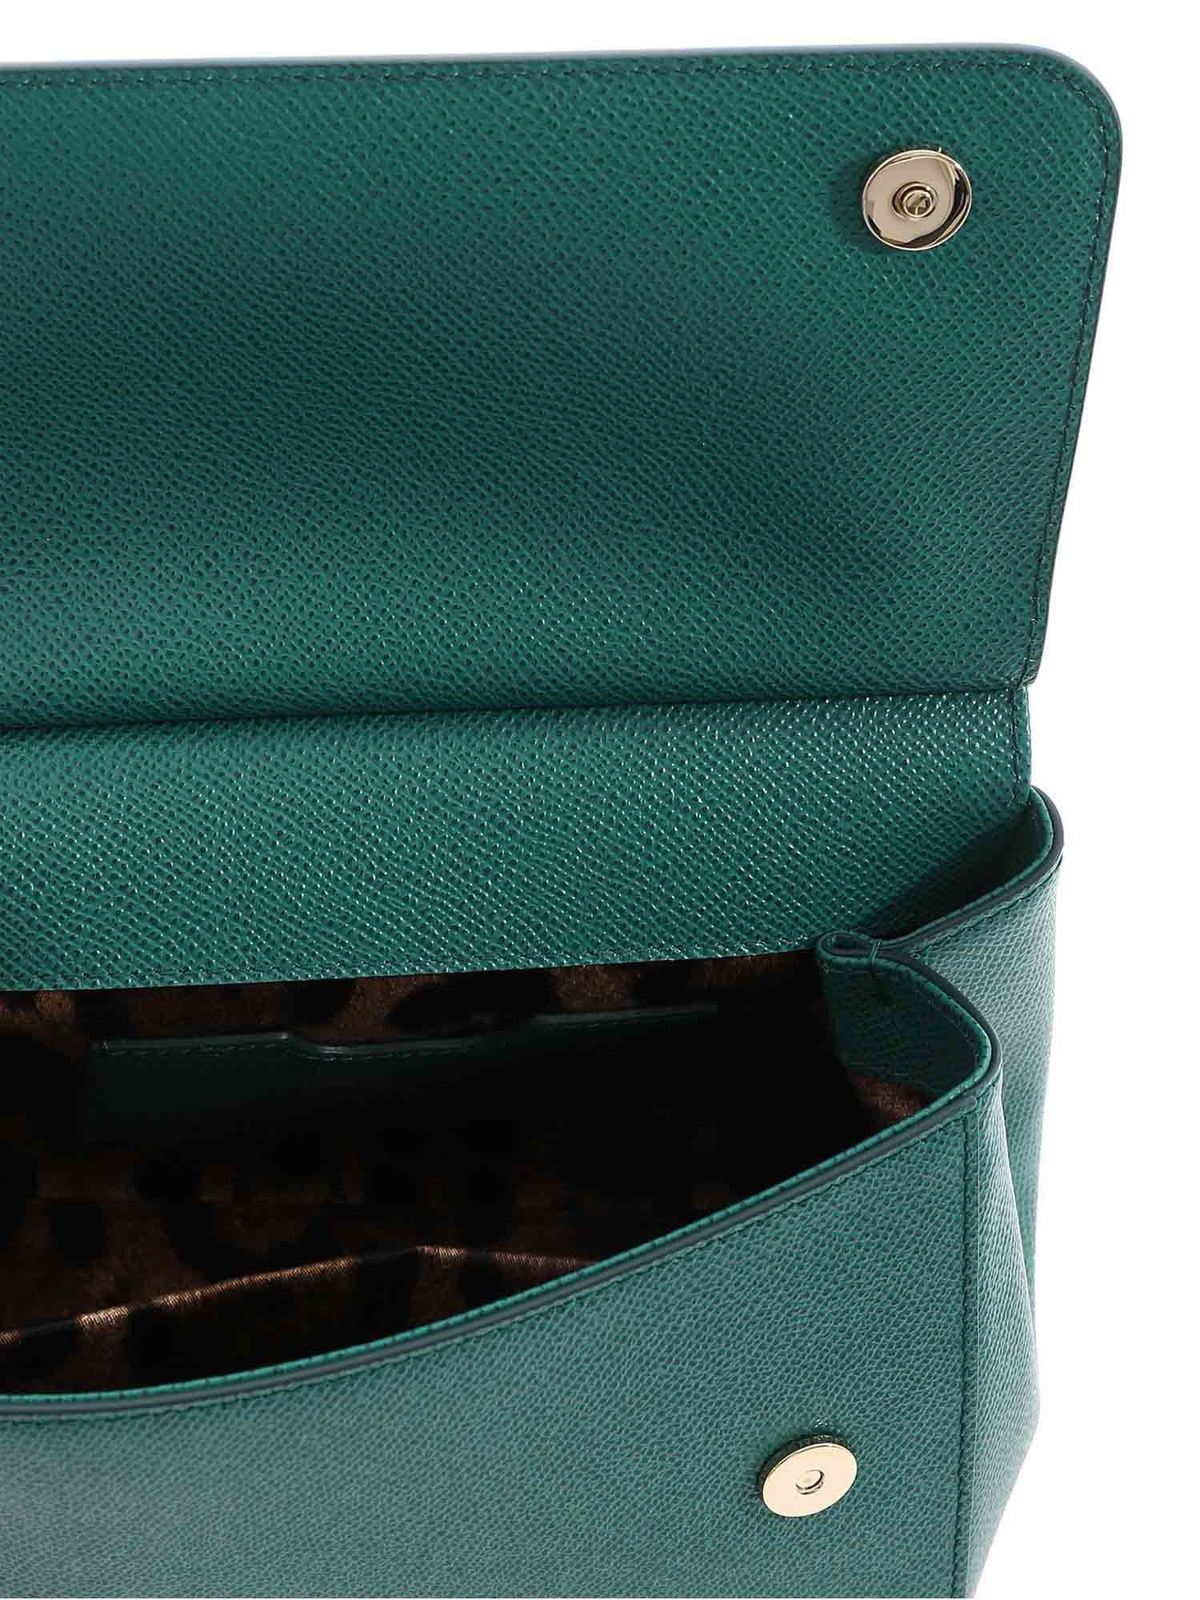 Dolce & Gabbana mini Sicily bag  Bags, Dolce and gabbana purses